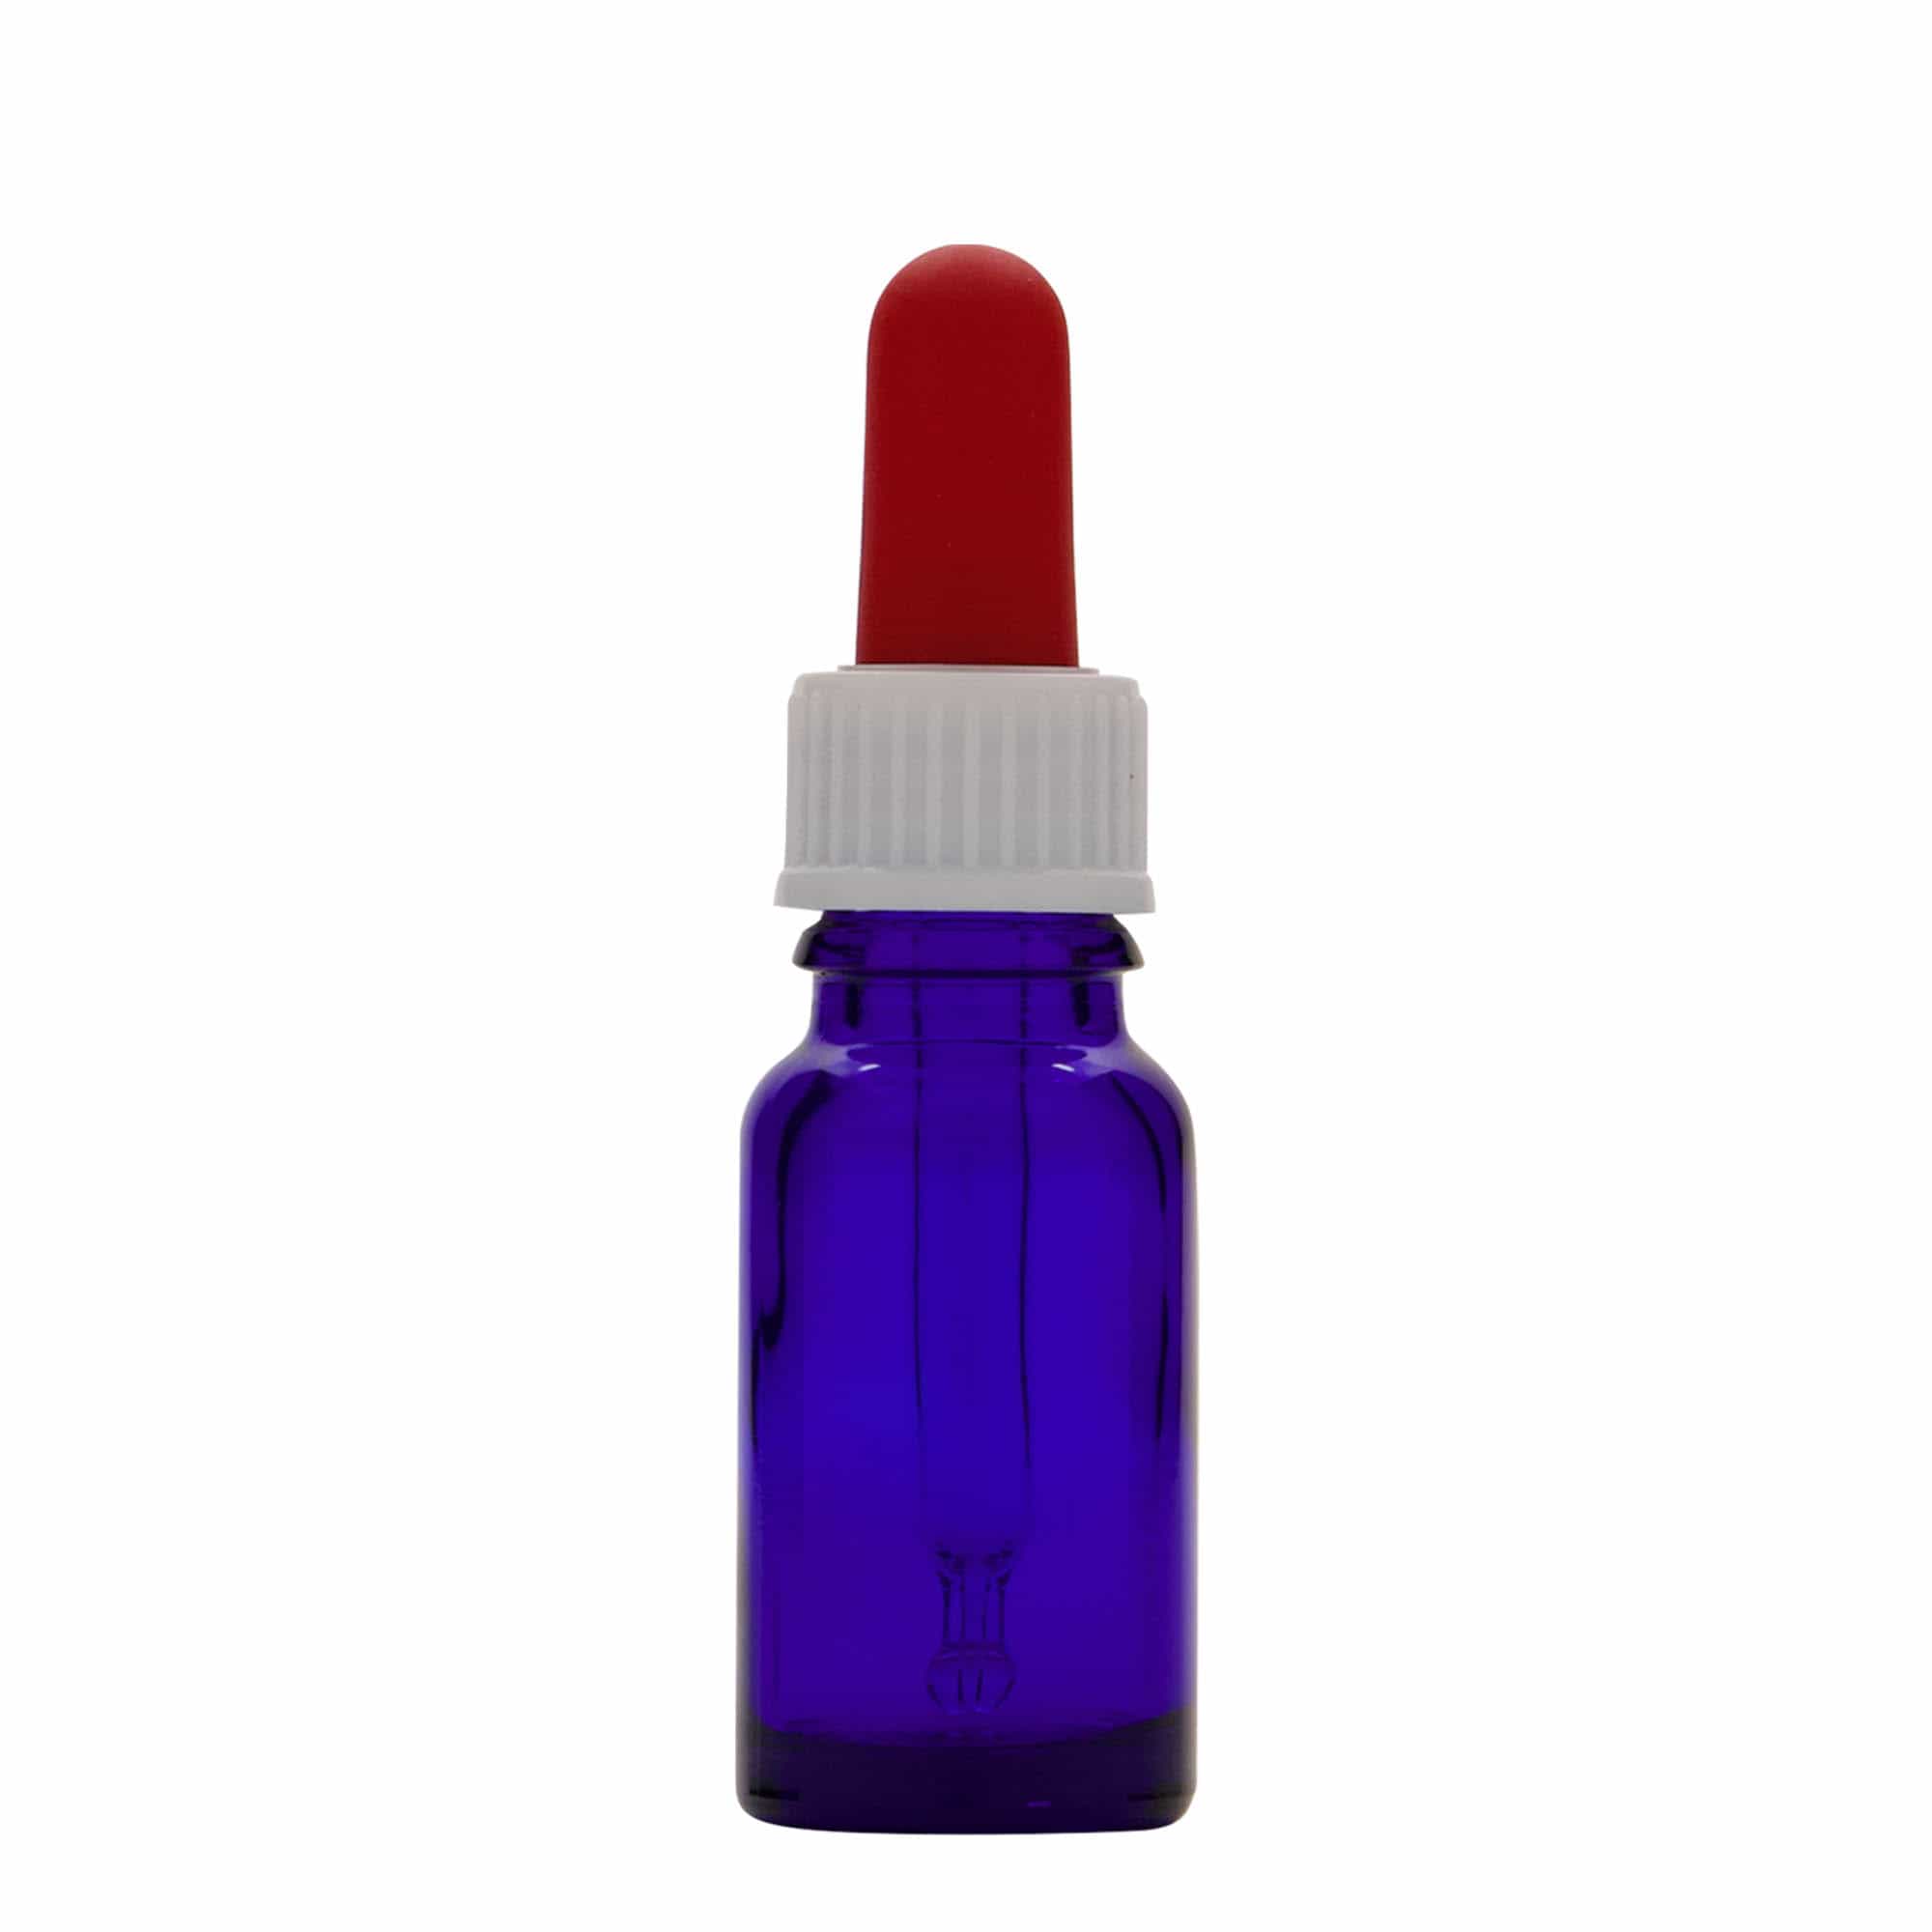 10 ml medicine pipette bottle, glass, royal blue/red, closure: DIN 18